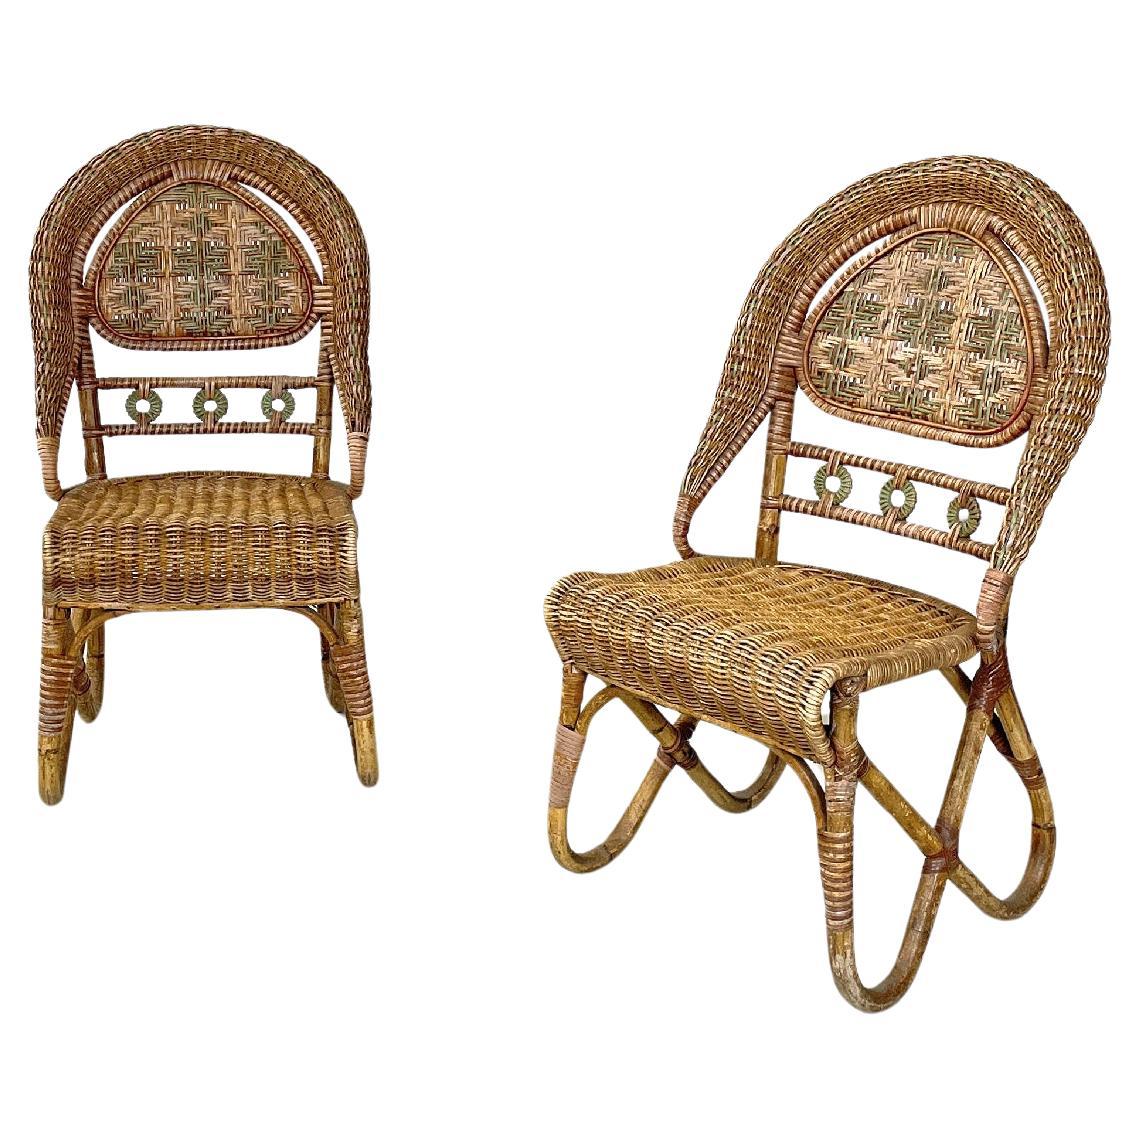 Italiana antique rattan chairs by Mongiardino and Bonacina for Bonacina, 1900s For Sale